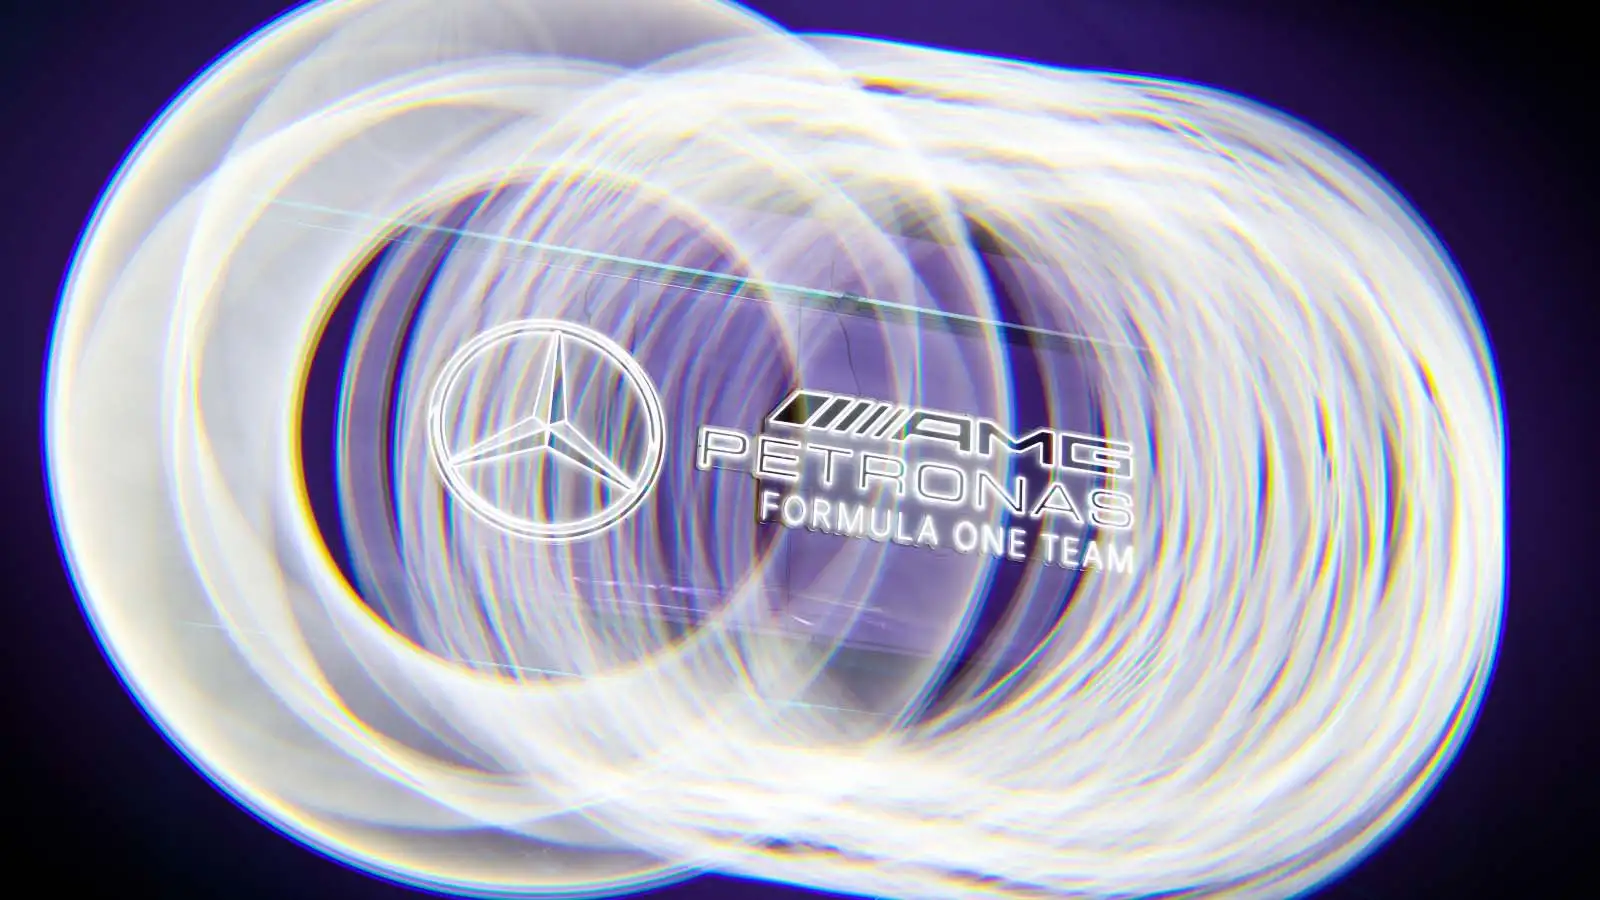 The Mercedes logo in the Las Vegas pit lane. F1 news